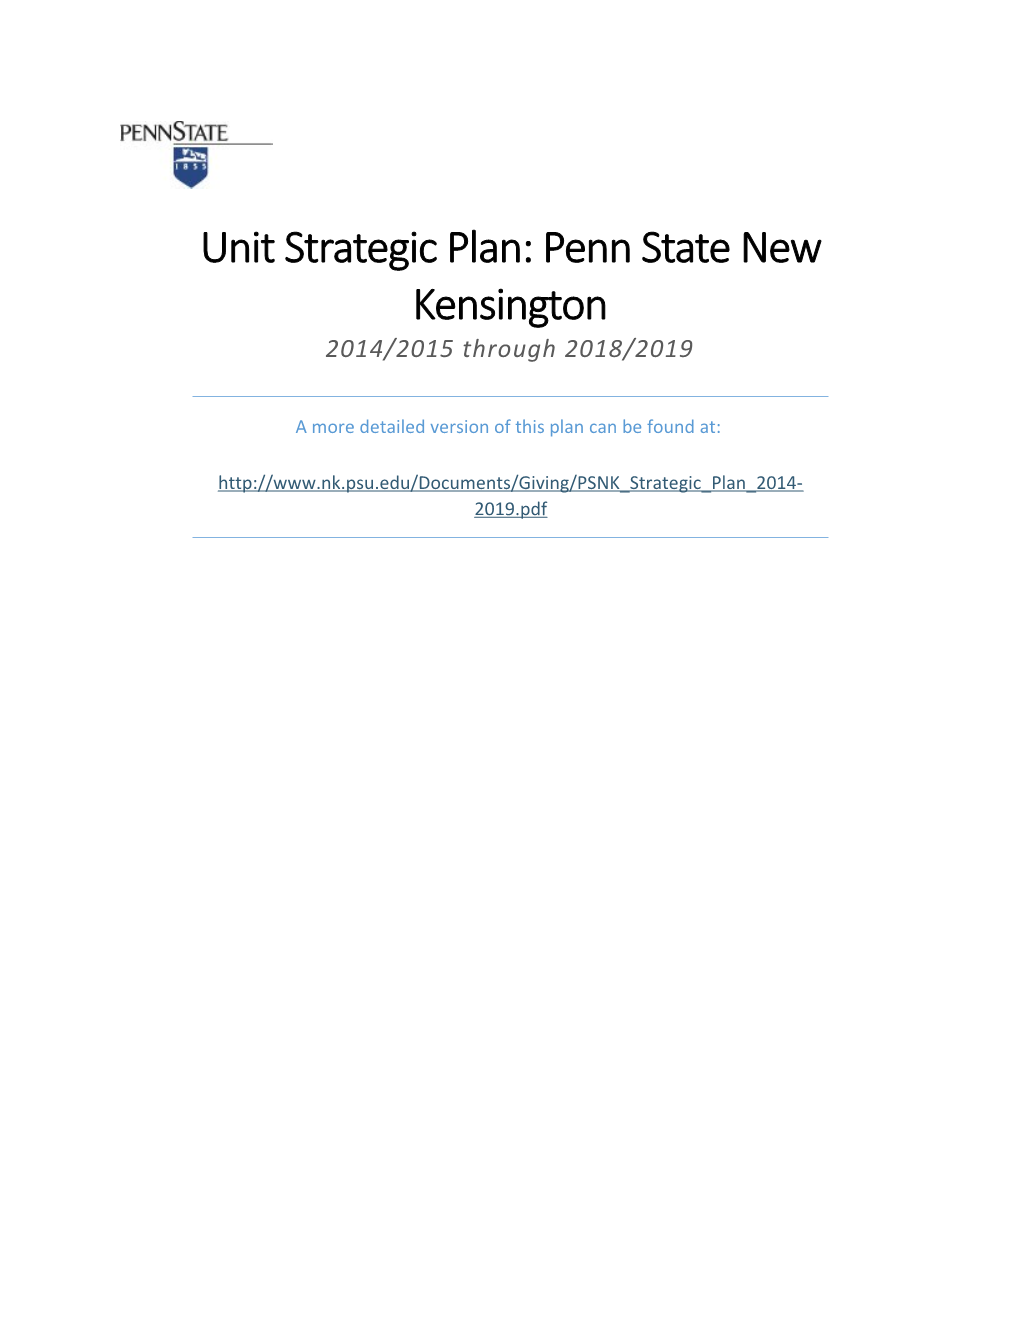 Penn State New Kensington Strategic Plan